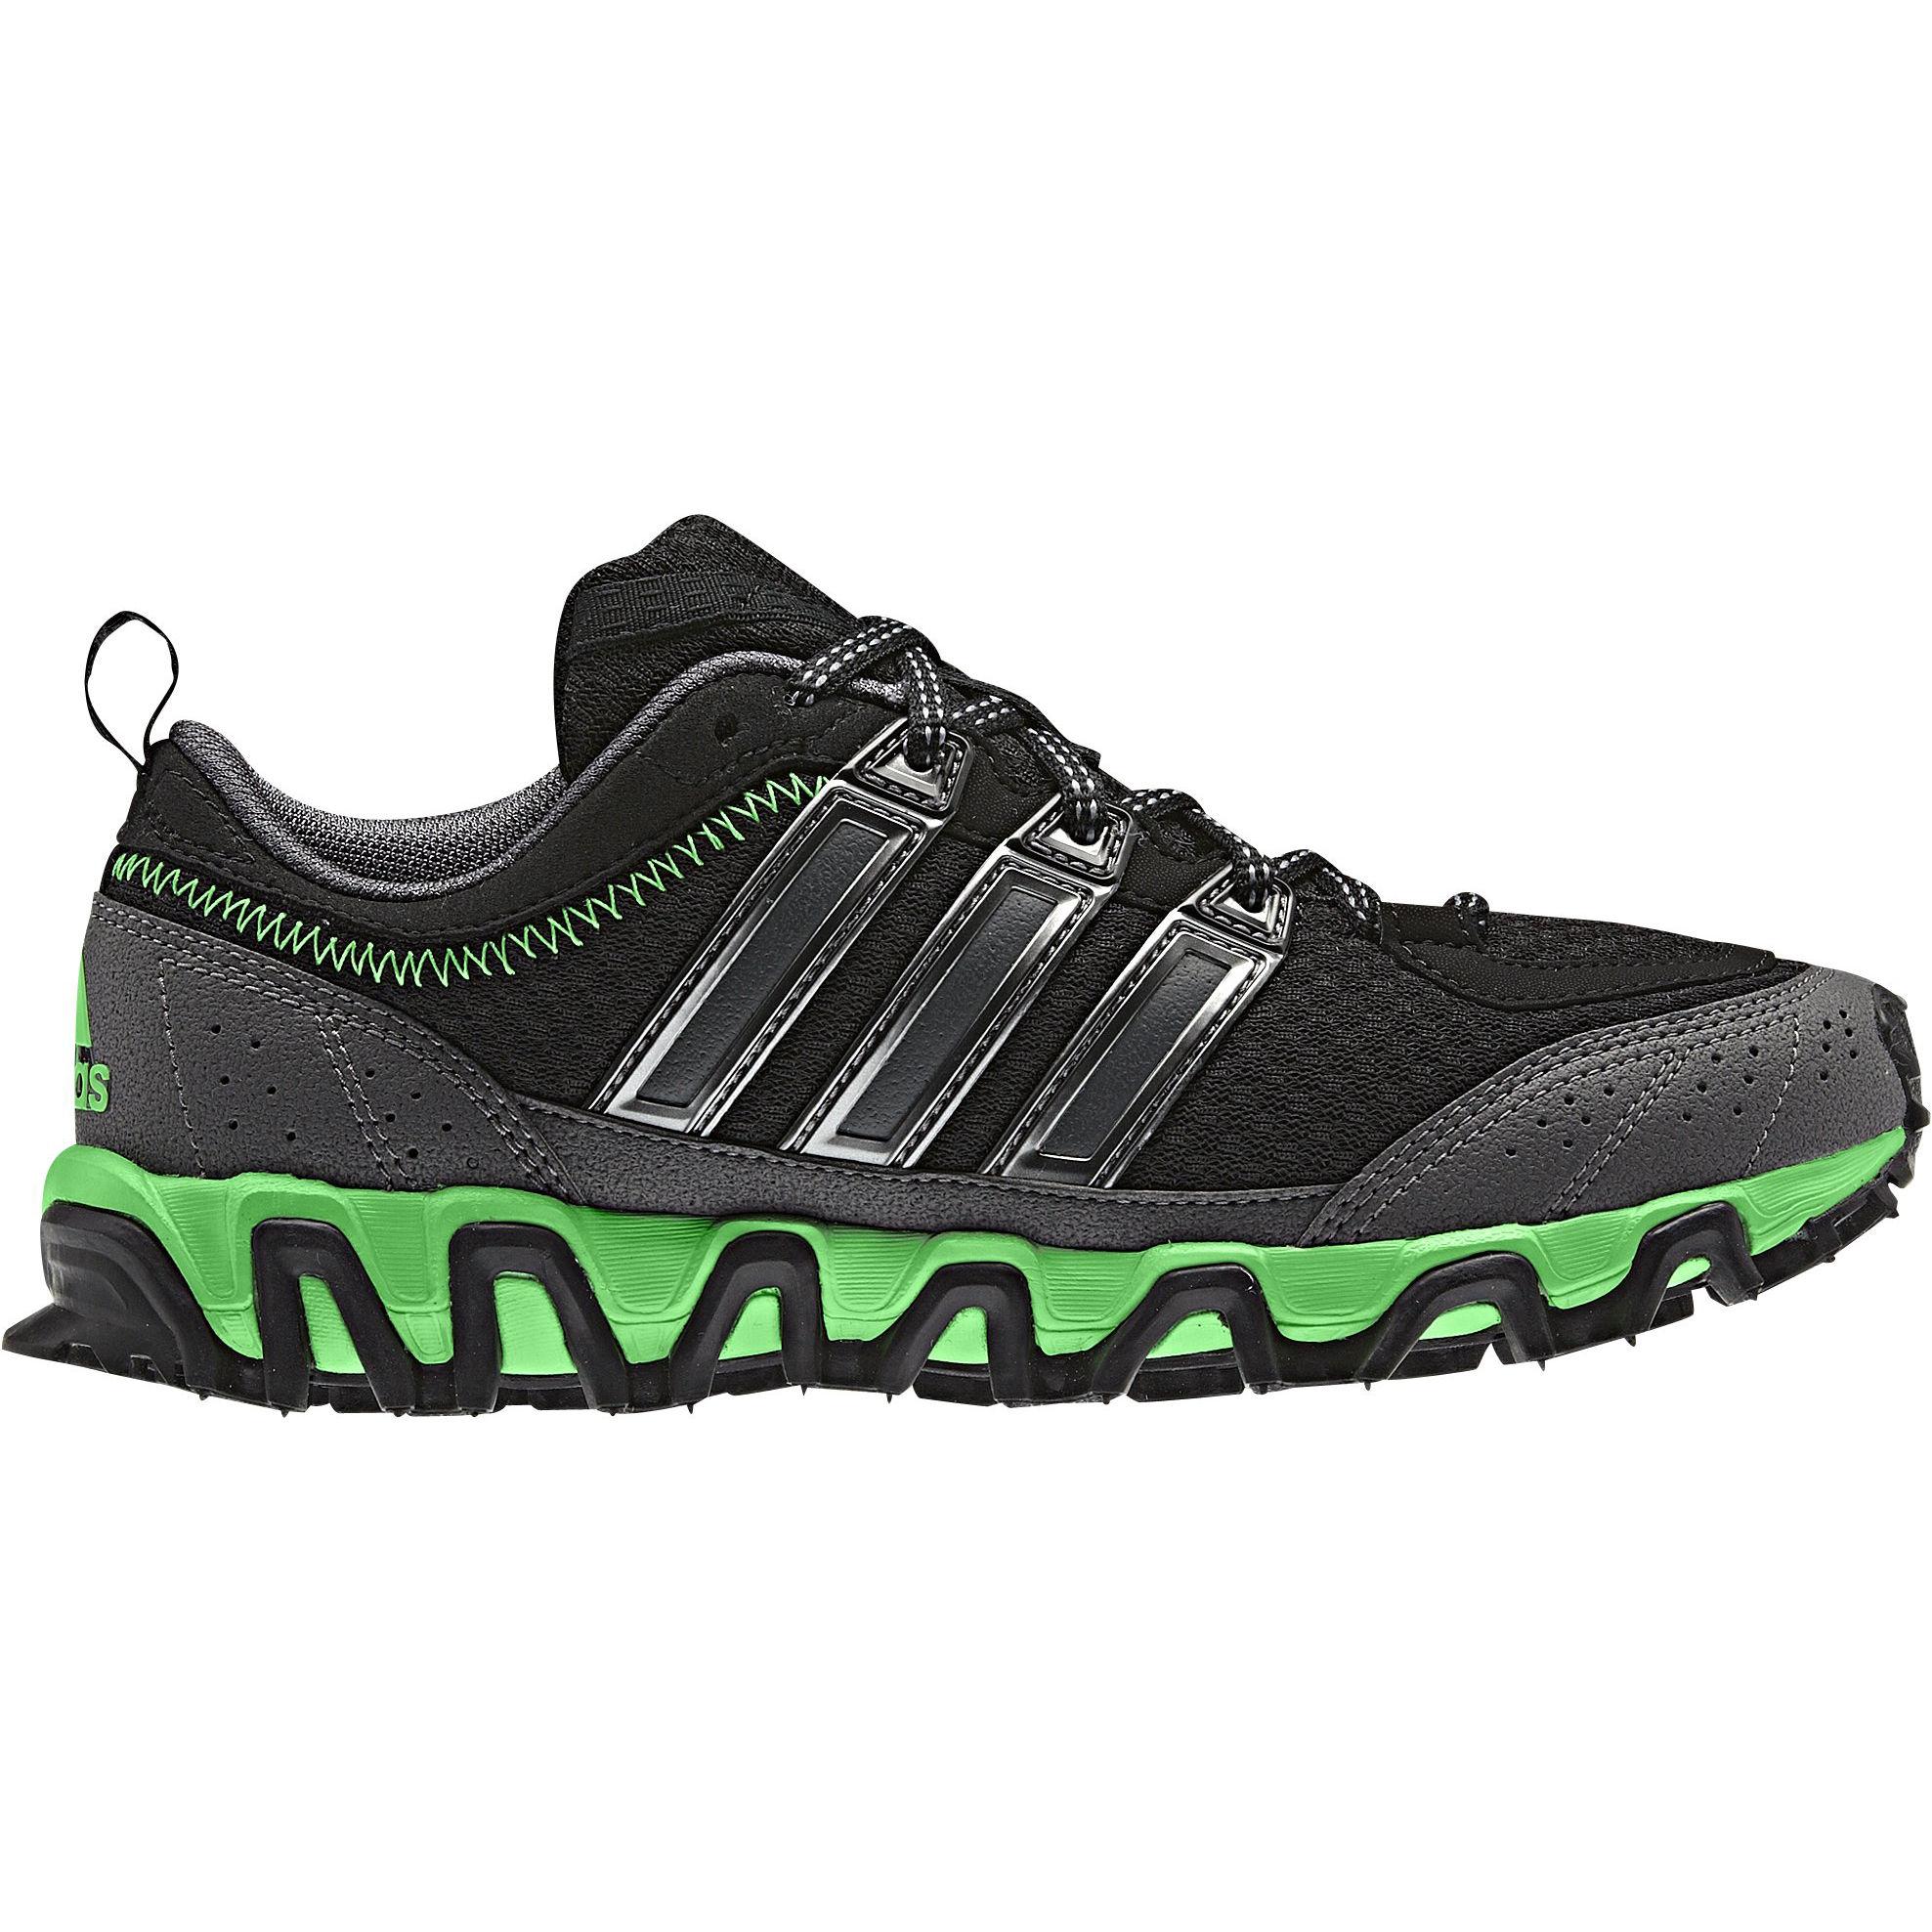 Foto Zapatillas para niños Adidas - KX TR XJ - UK 13.5 Black/Iron/Zest